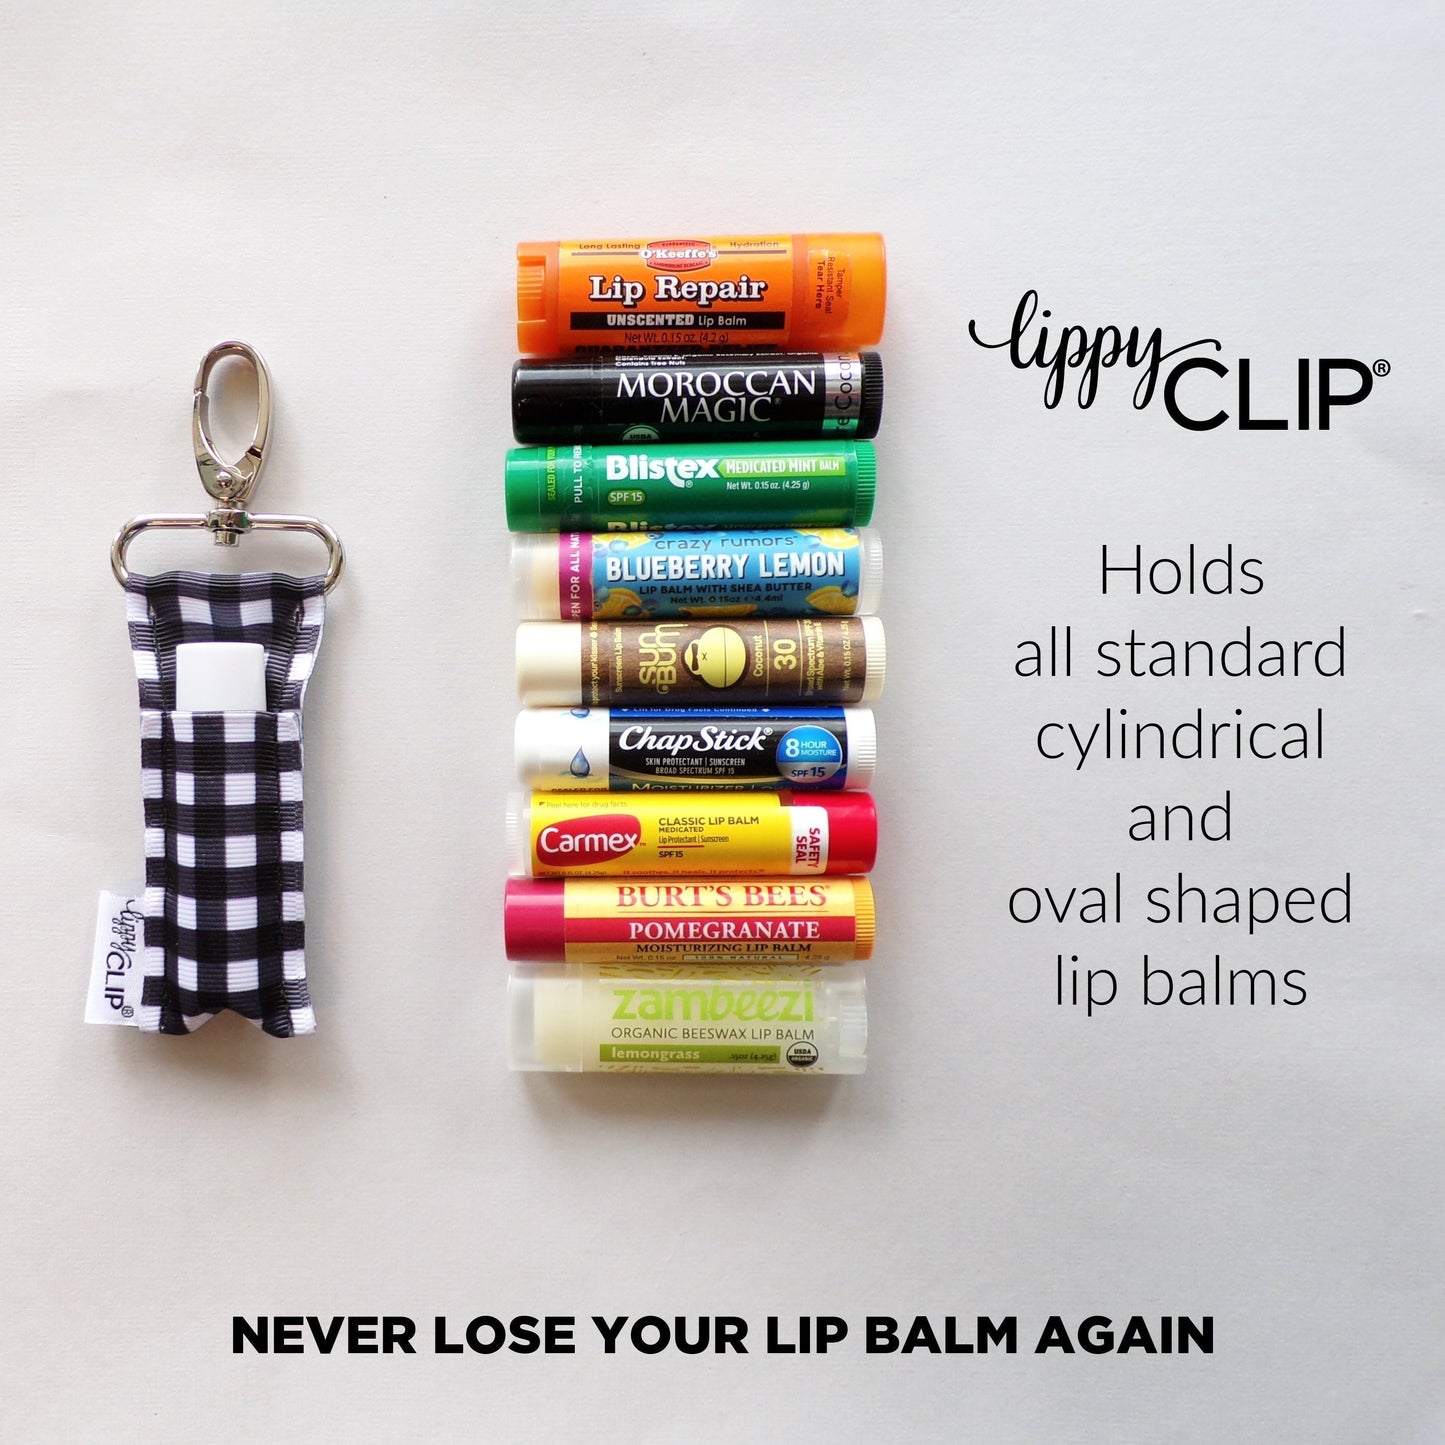 Hearts and Stripes LippyClip® Lip Balm Holder